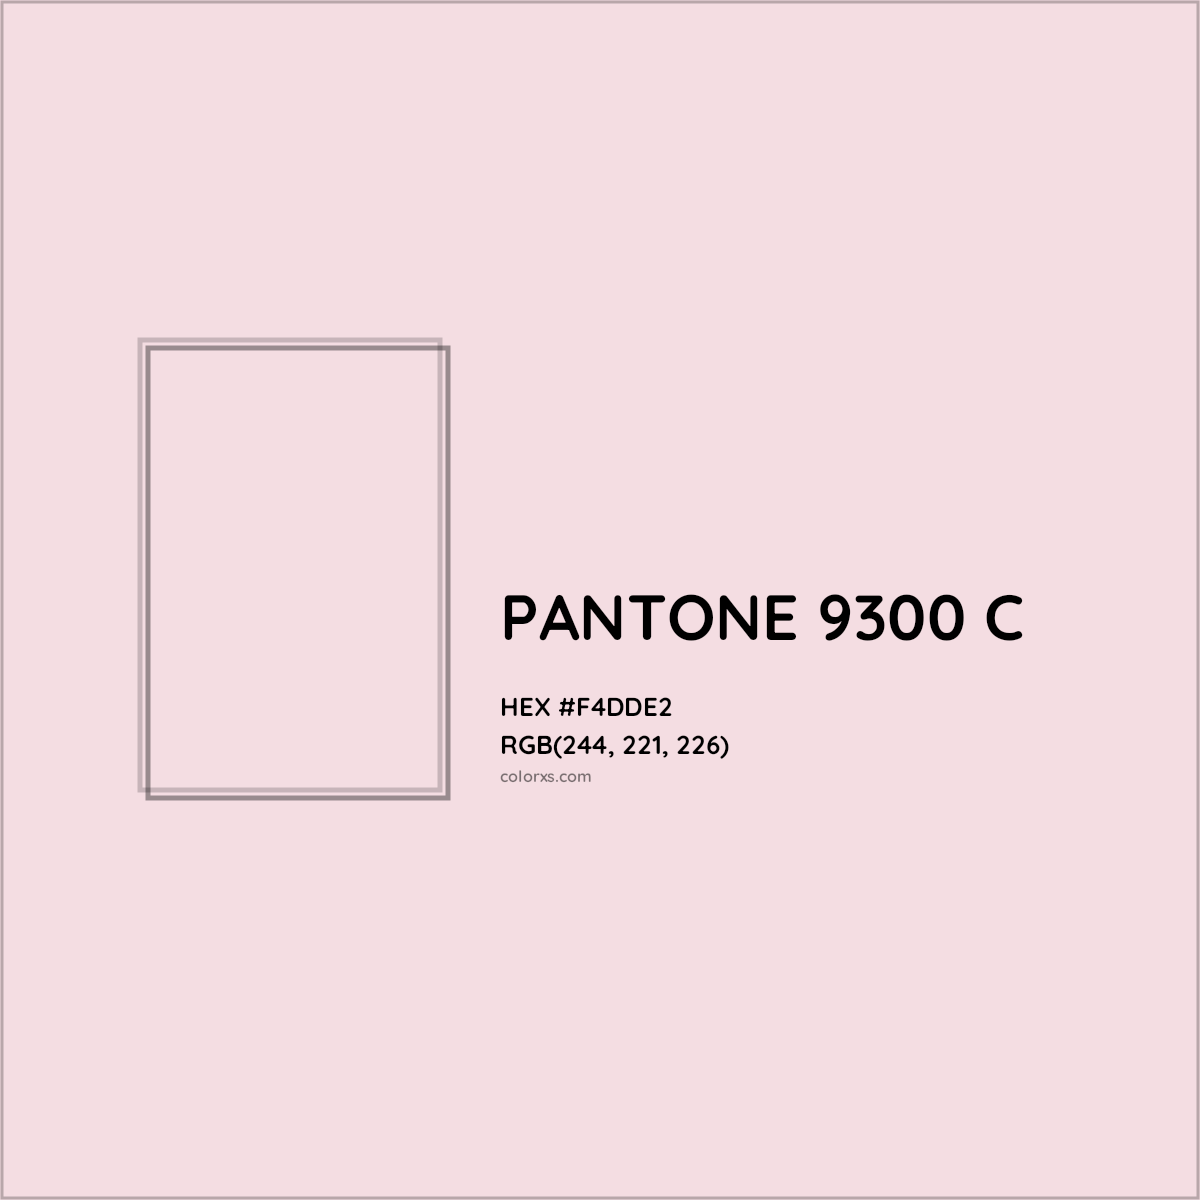 HEX #F4DDE2 PANTONE 9300 C CMS Pantone PMS - Color Code